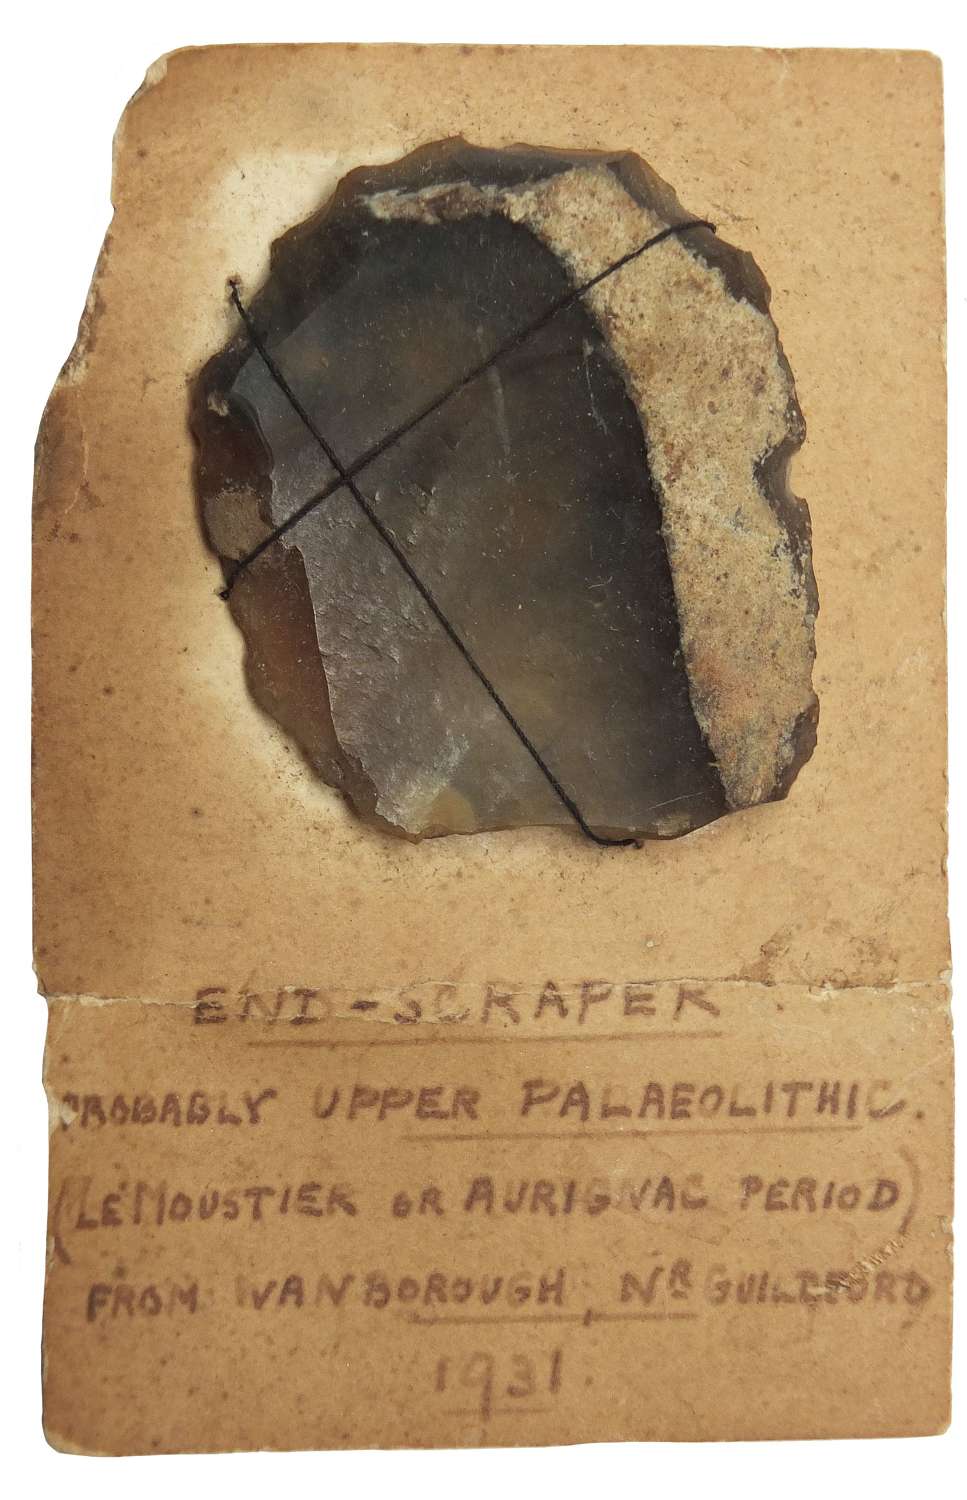 A Neolithic flint endscraper found near Guildford, Surrey, in 1931